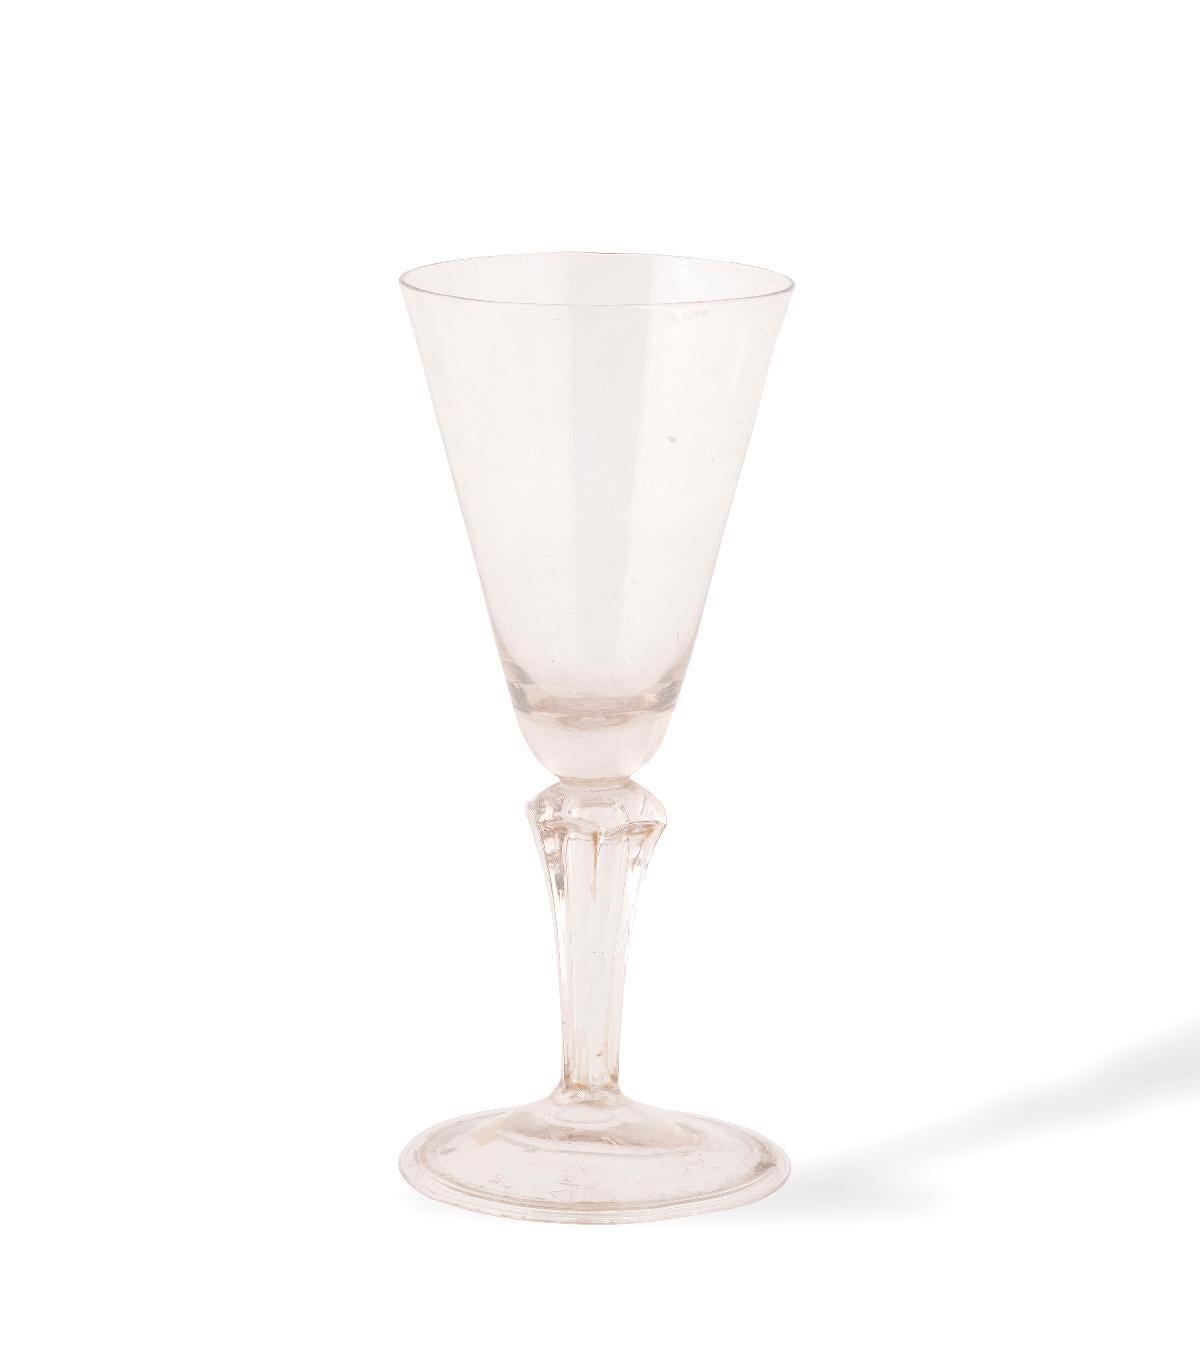 16th century glassware